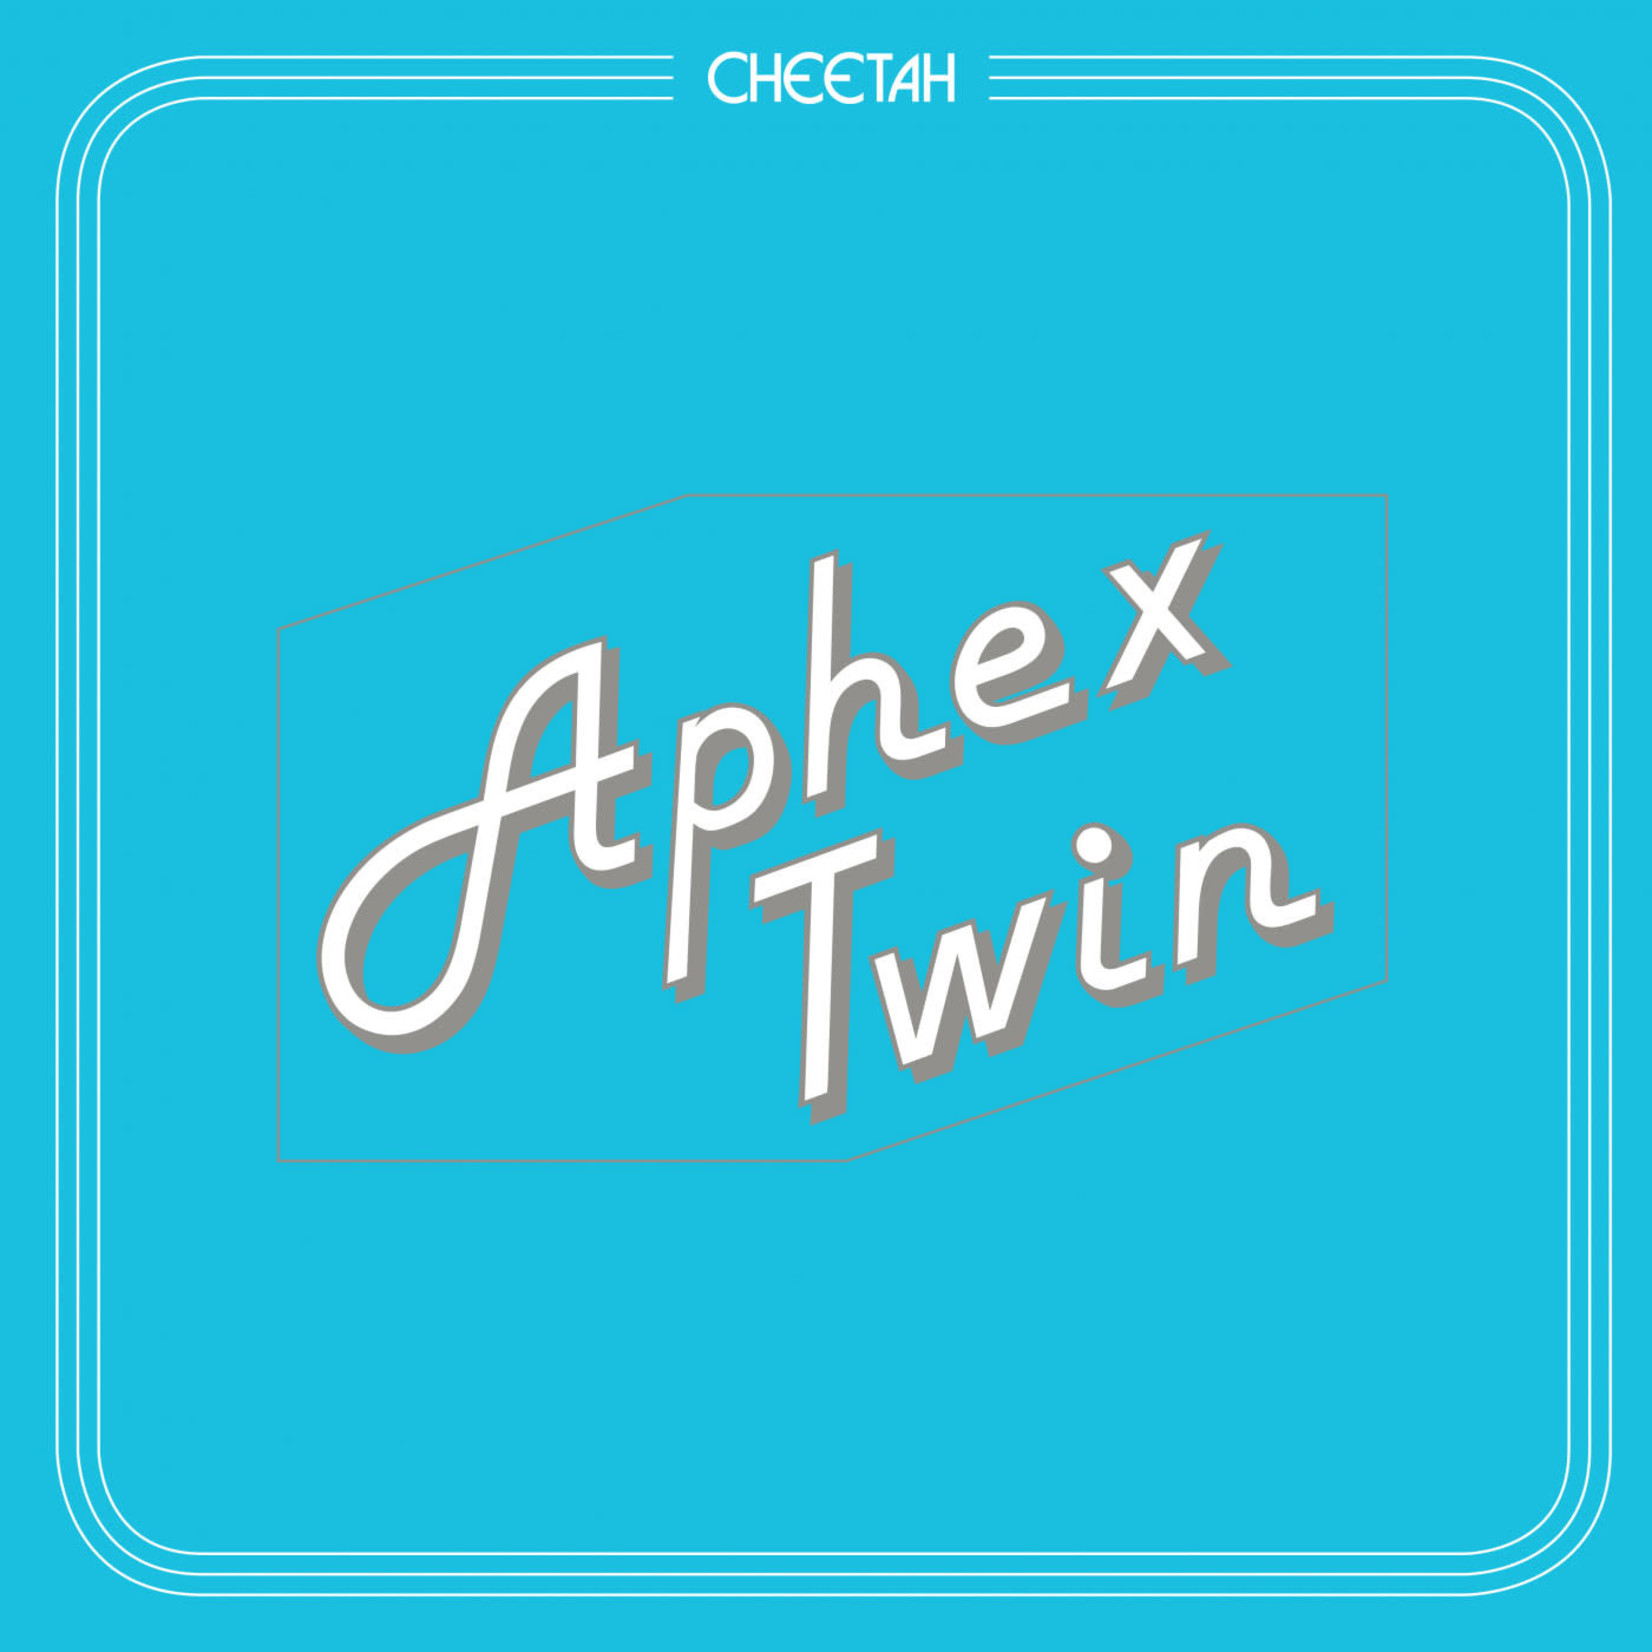 [New] APHEX TWIN - CHEETAH EP (12"EP)